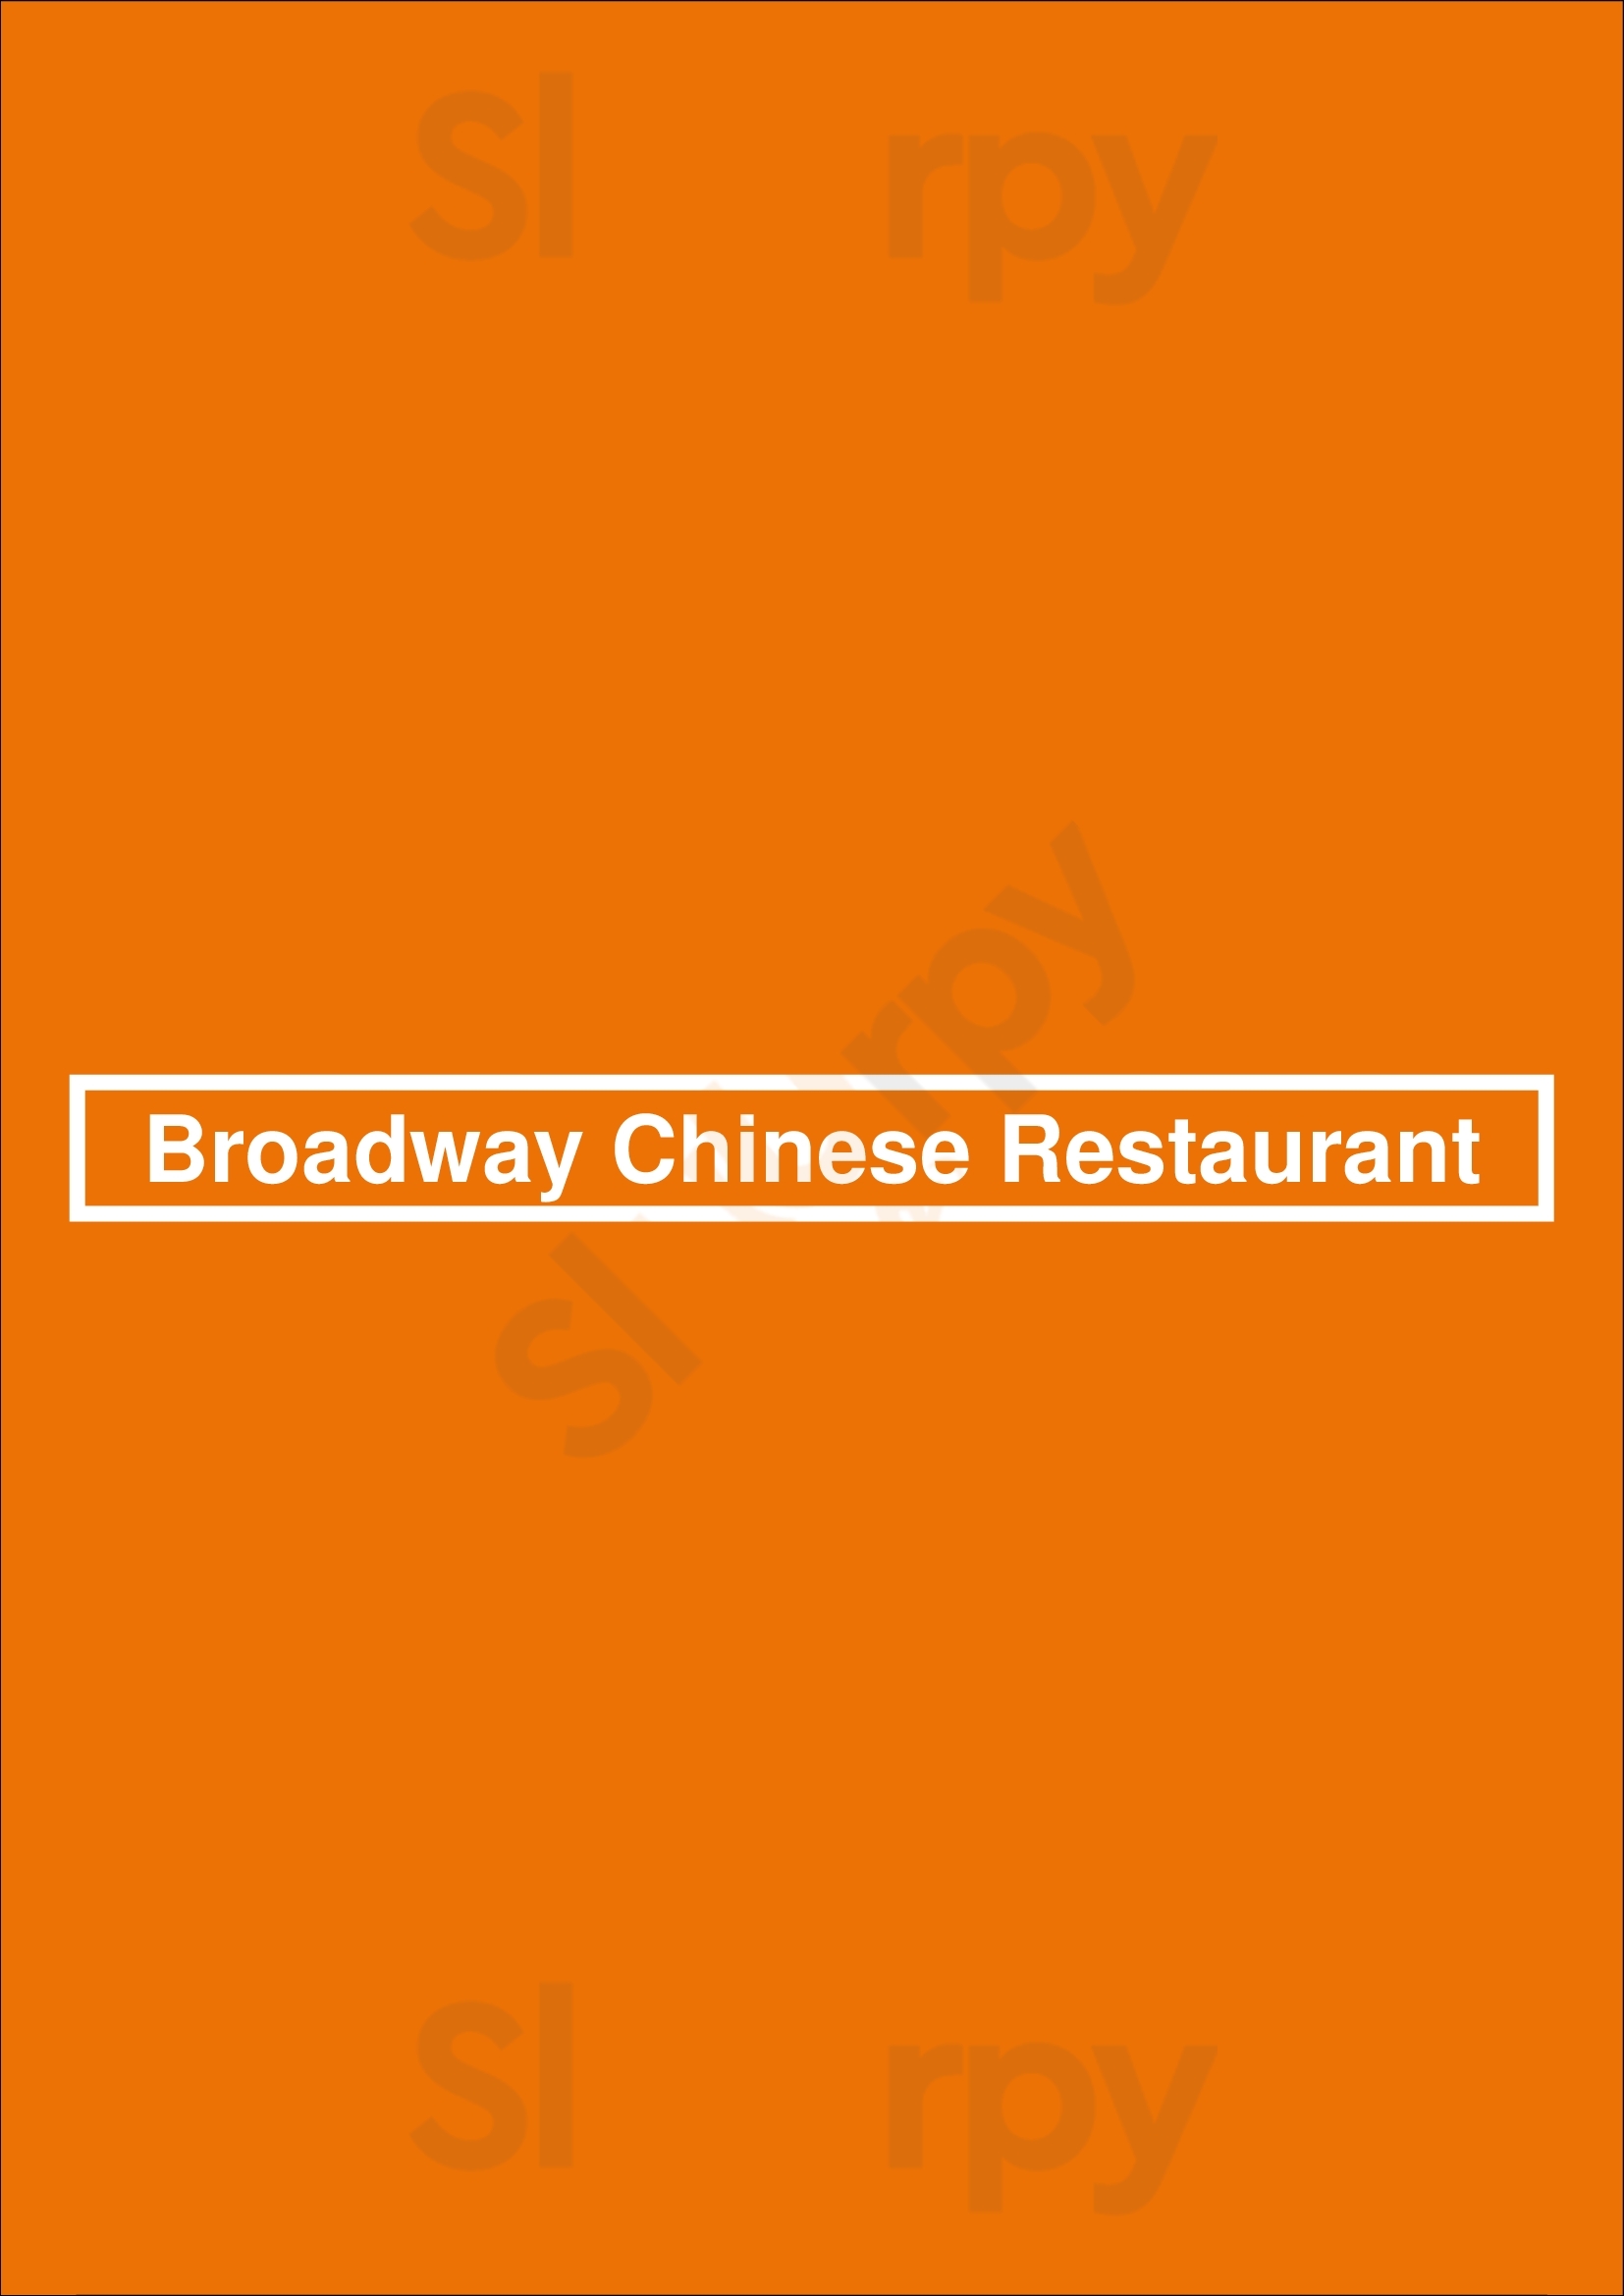 Broadway Chinese Restaurant Vancouver Menu - 1